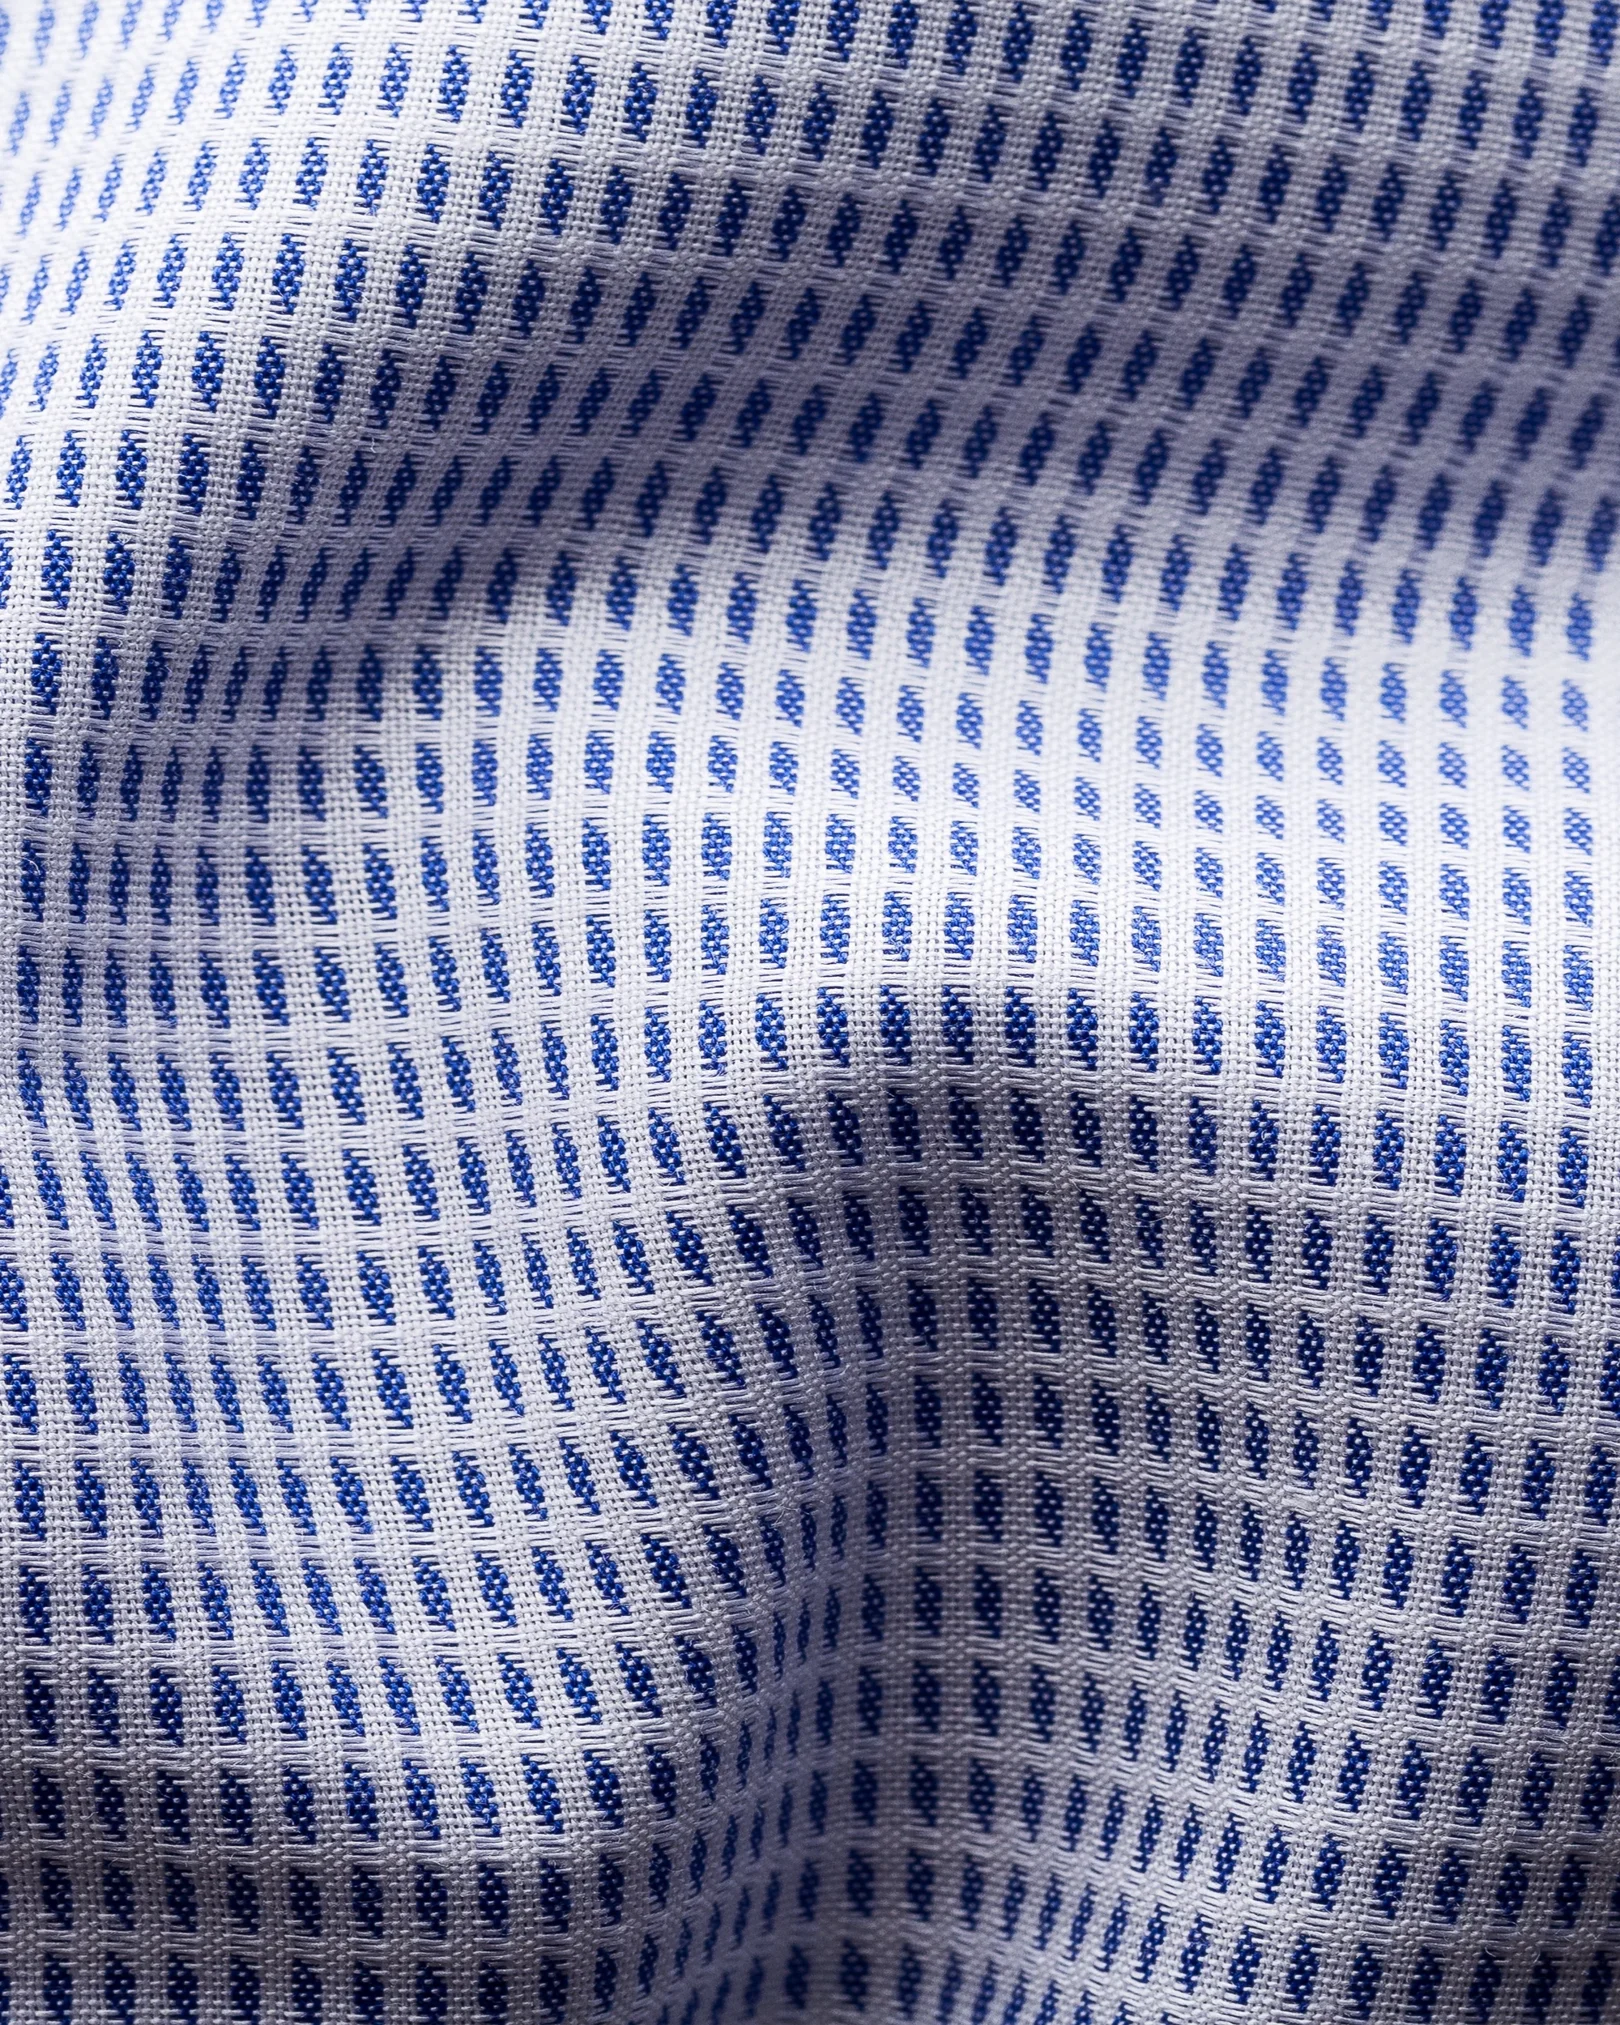 Eton - blue micro woven shirt